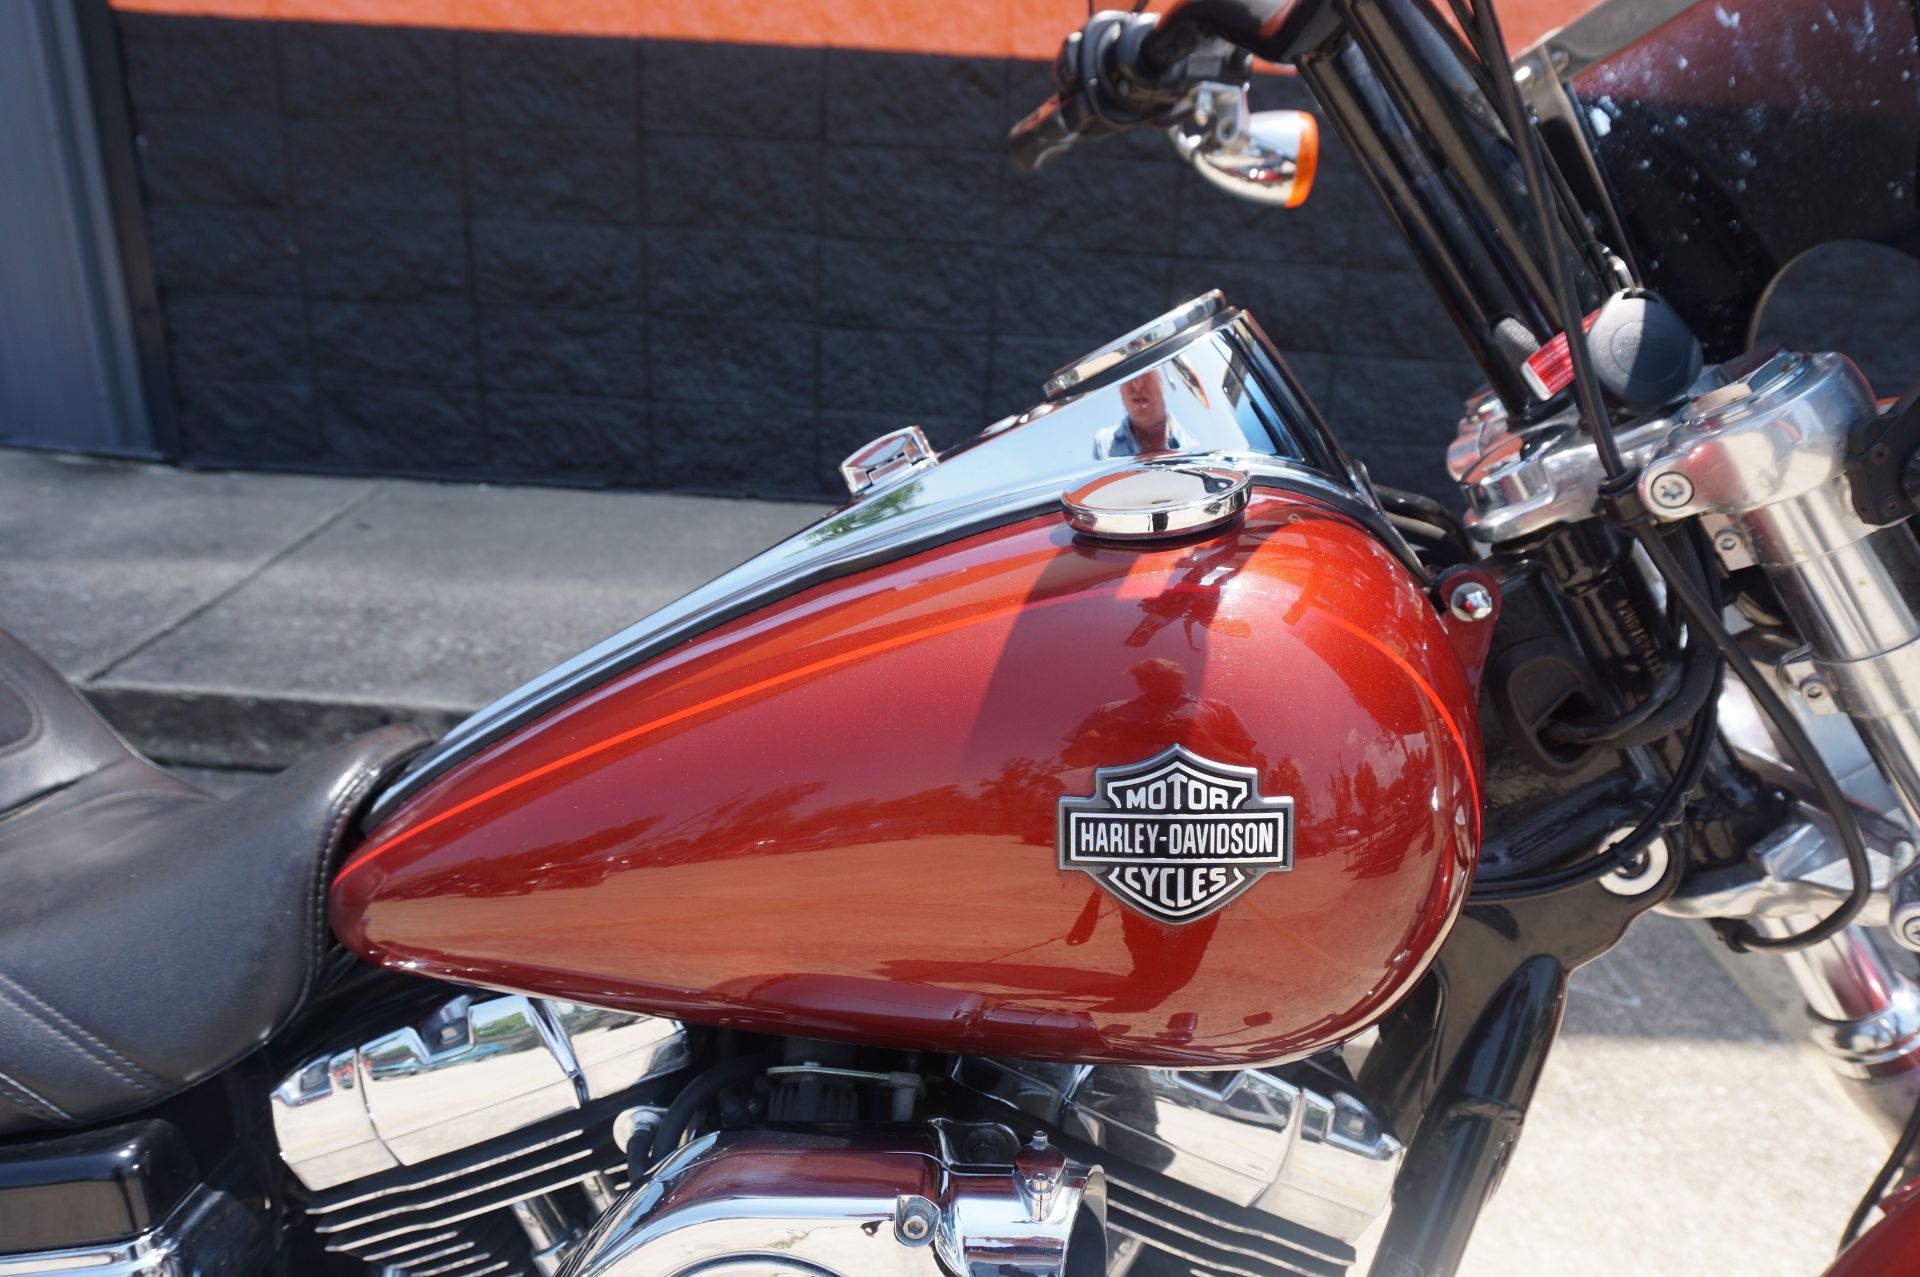 2010 Harley-Davidson Dyna® Wide Glide® in Metairie, Louisiana - Photo 3